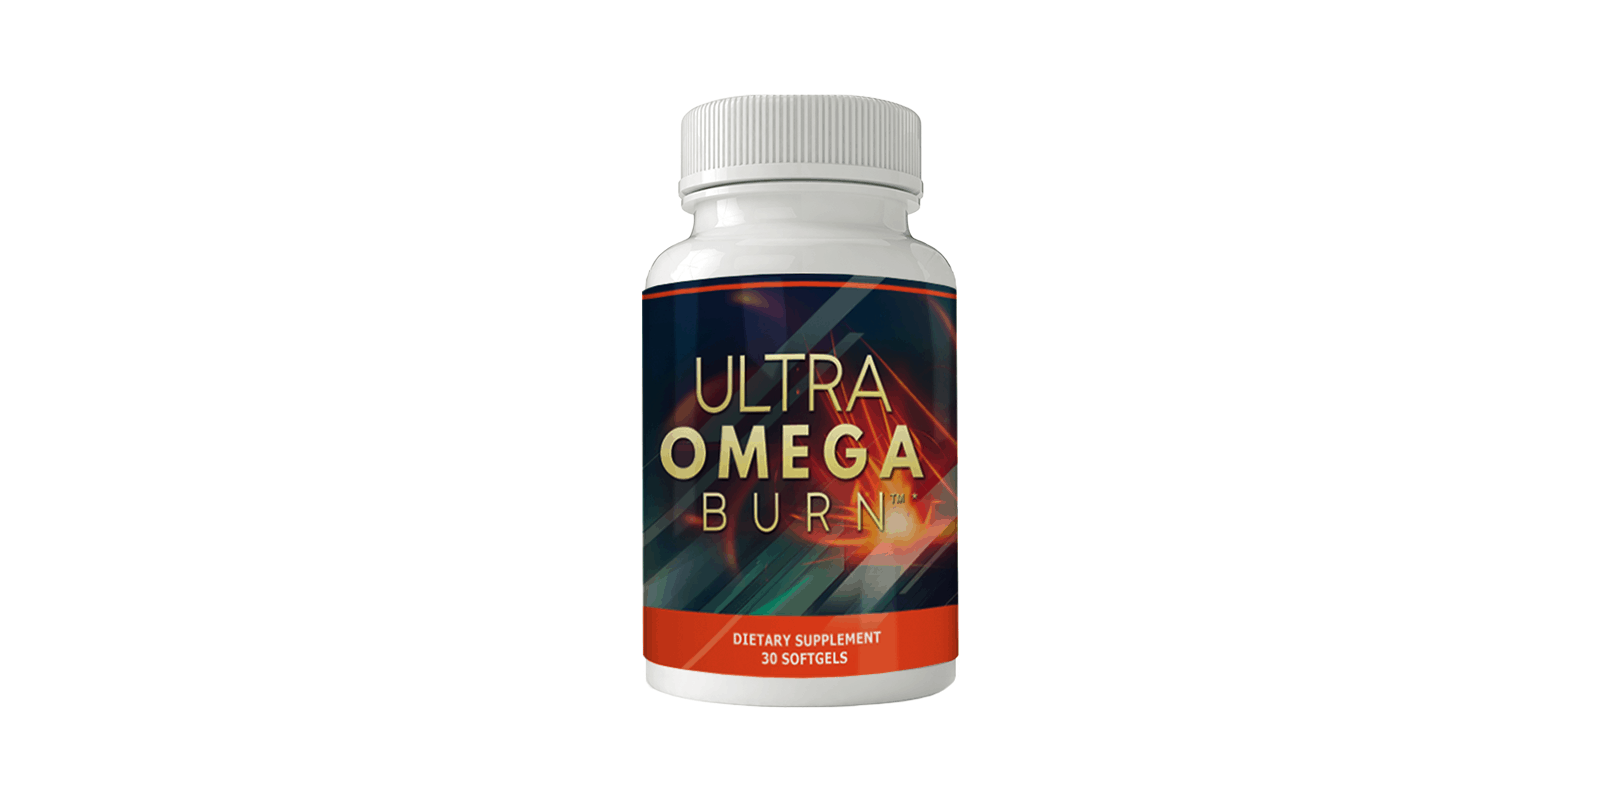 Ultra Omega Burn reviews